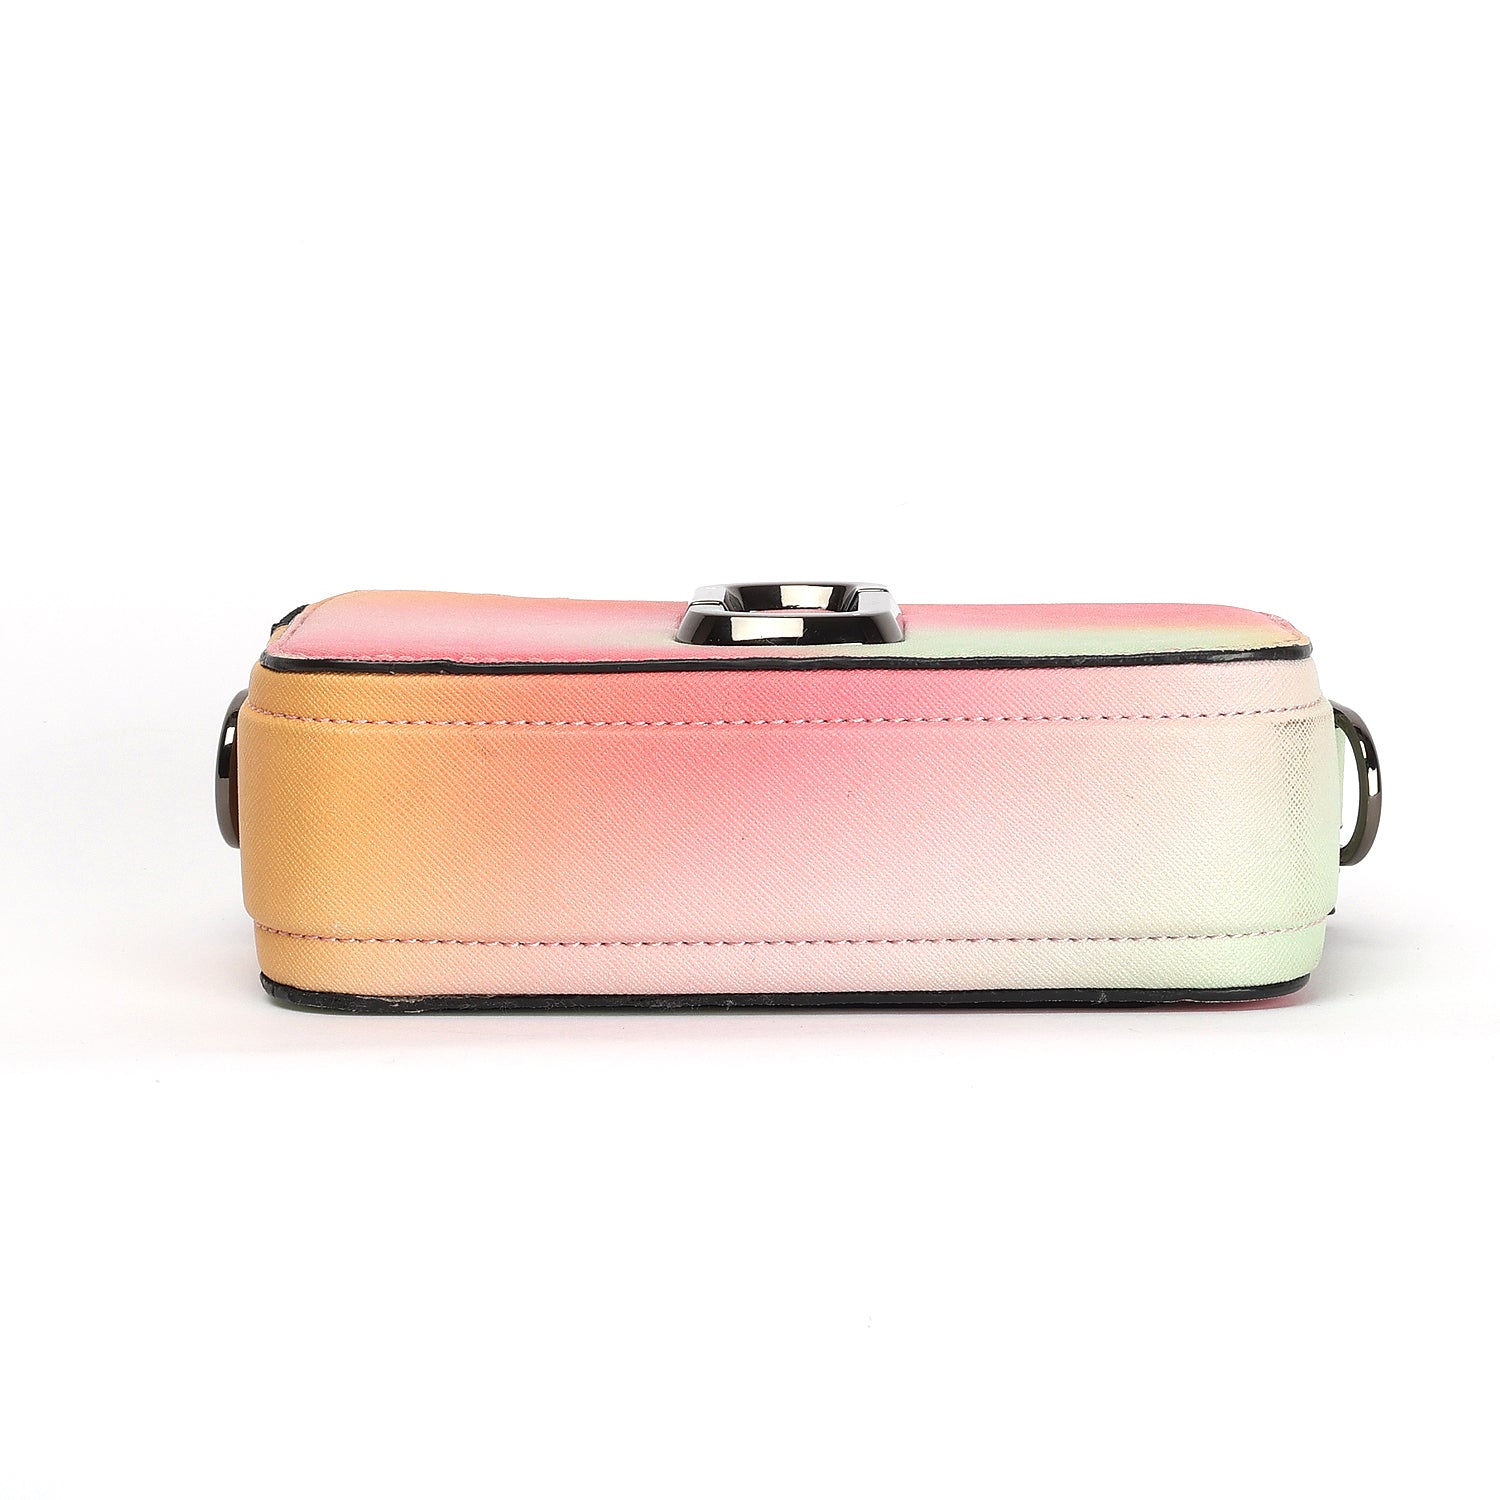 The Airbrushed Snapshot Camera Bag